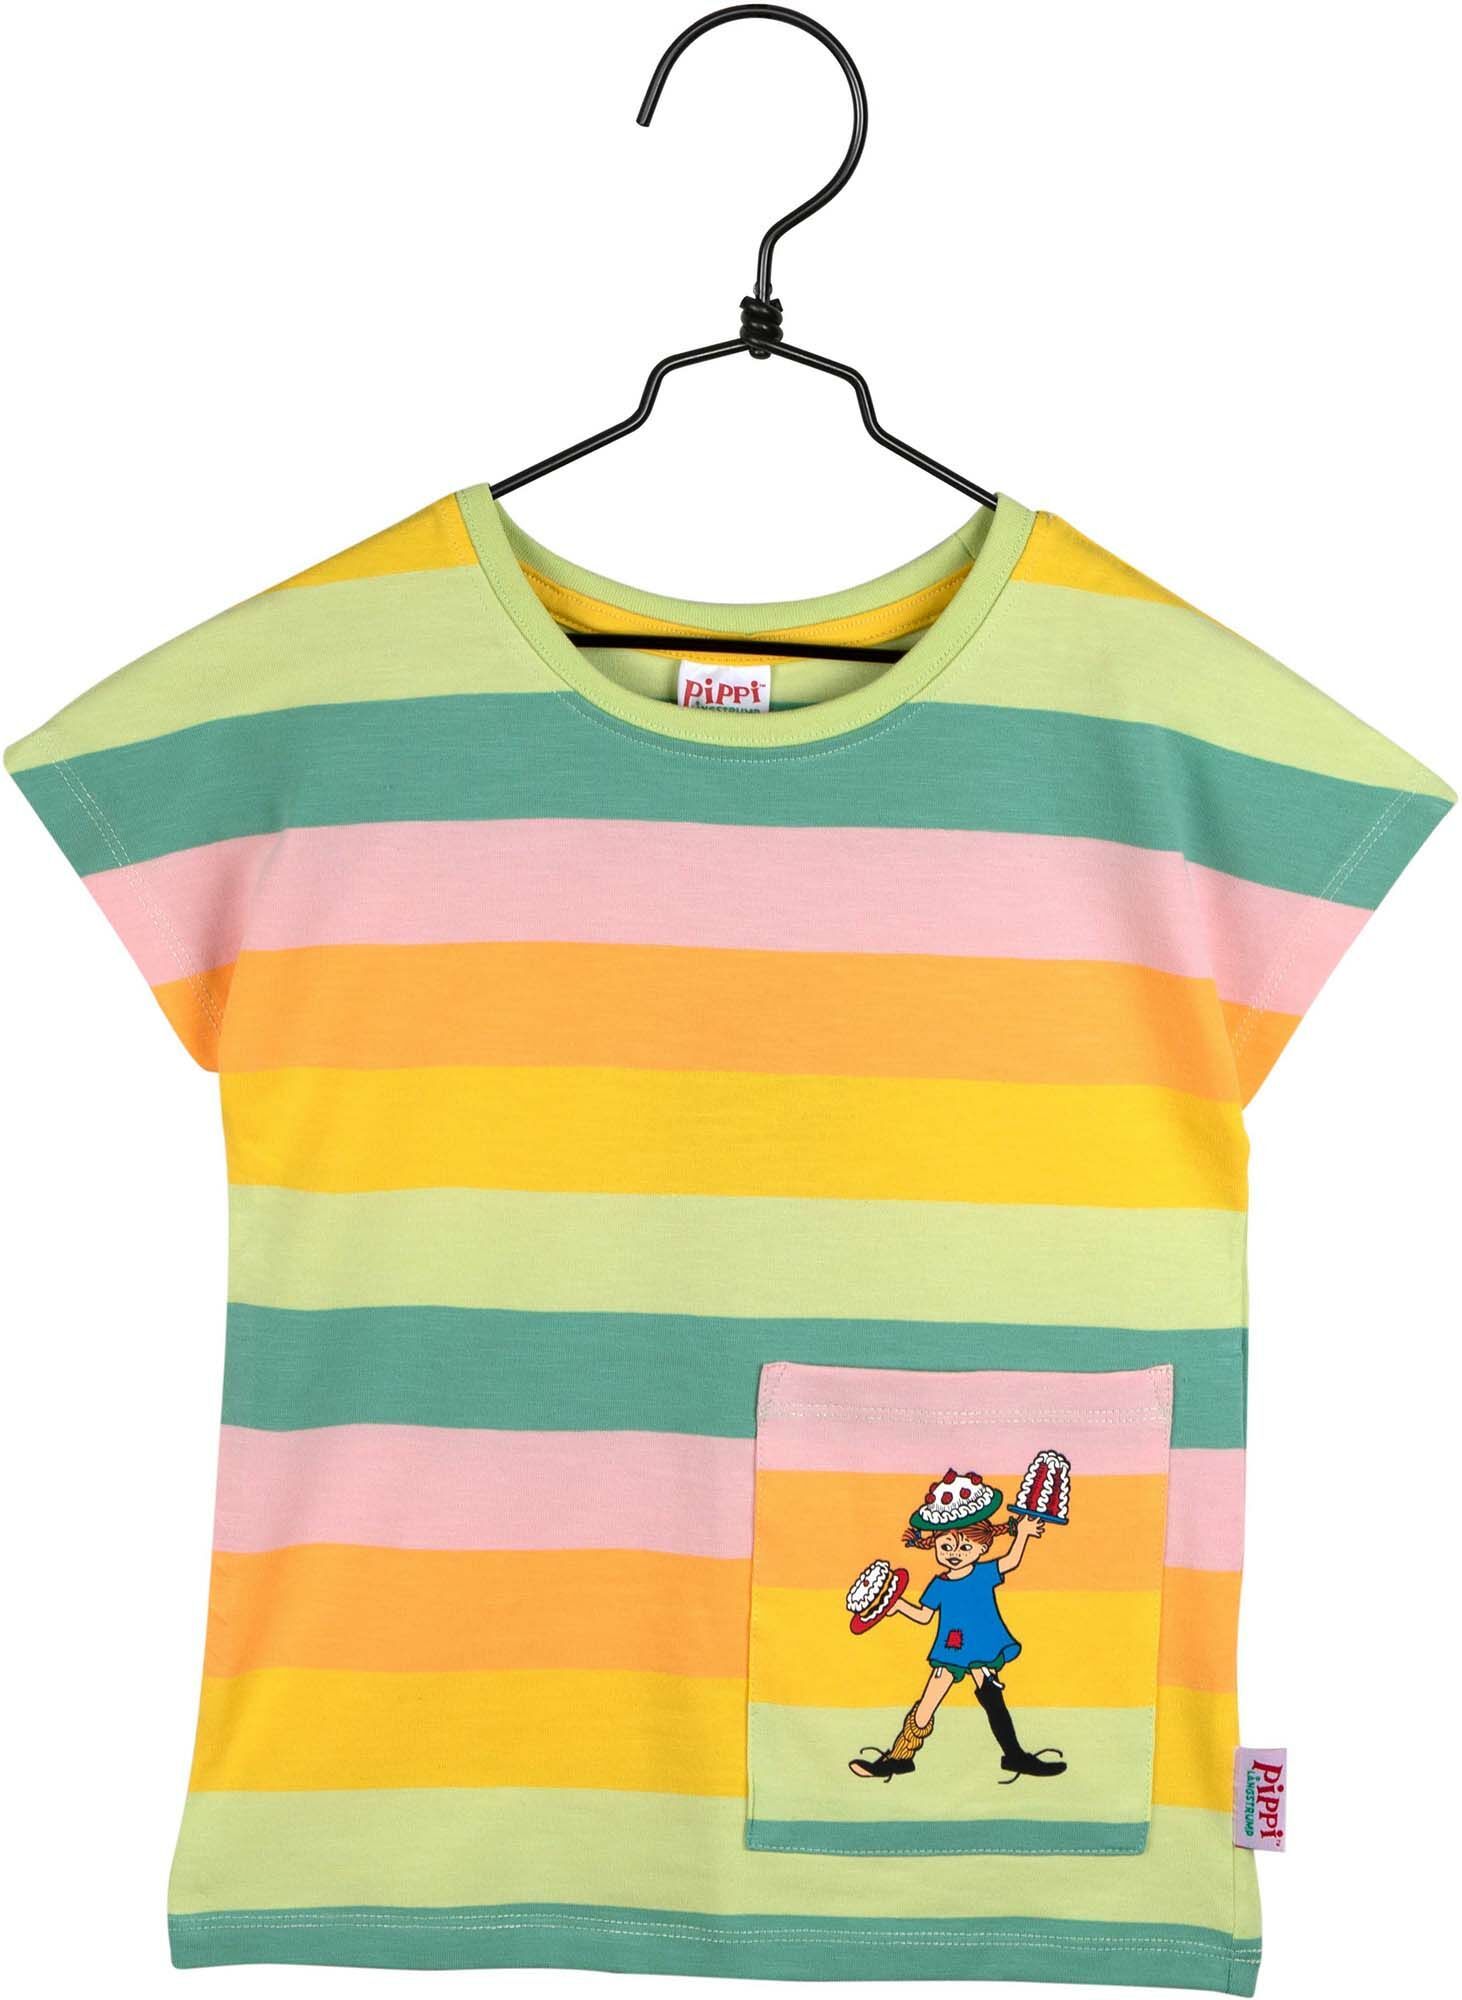 Pippi Långstrump Regnbåge T-Shirt Grön 128